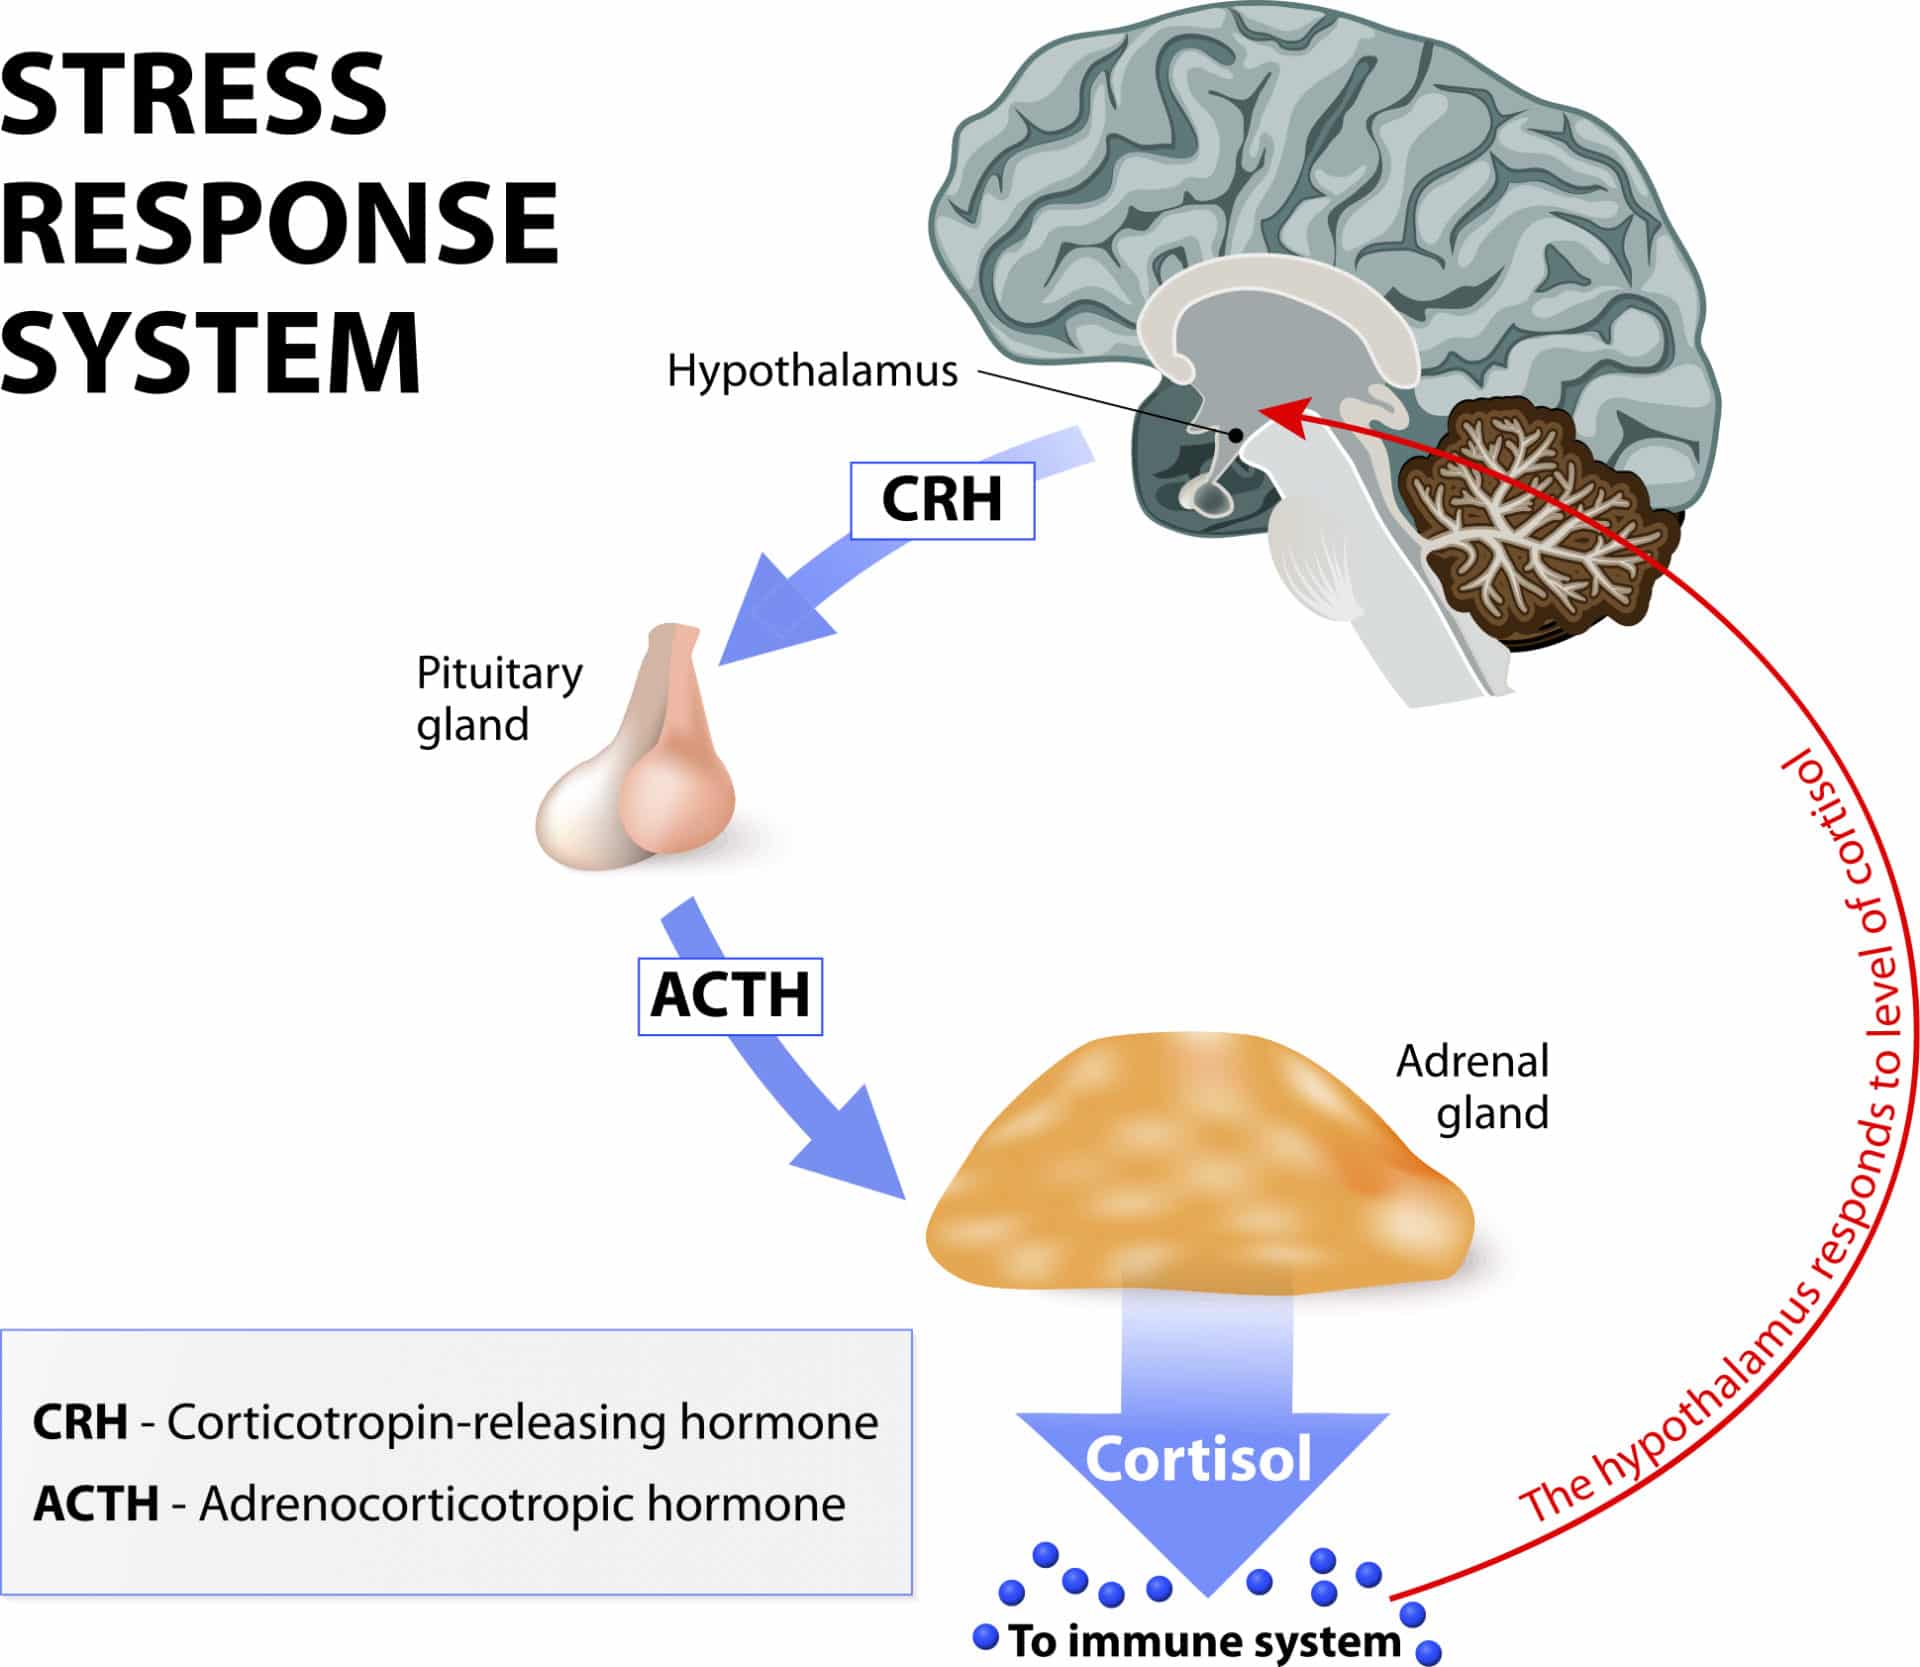 Stress response system